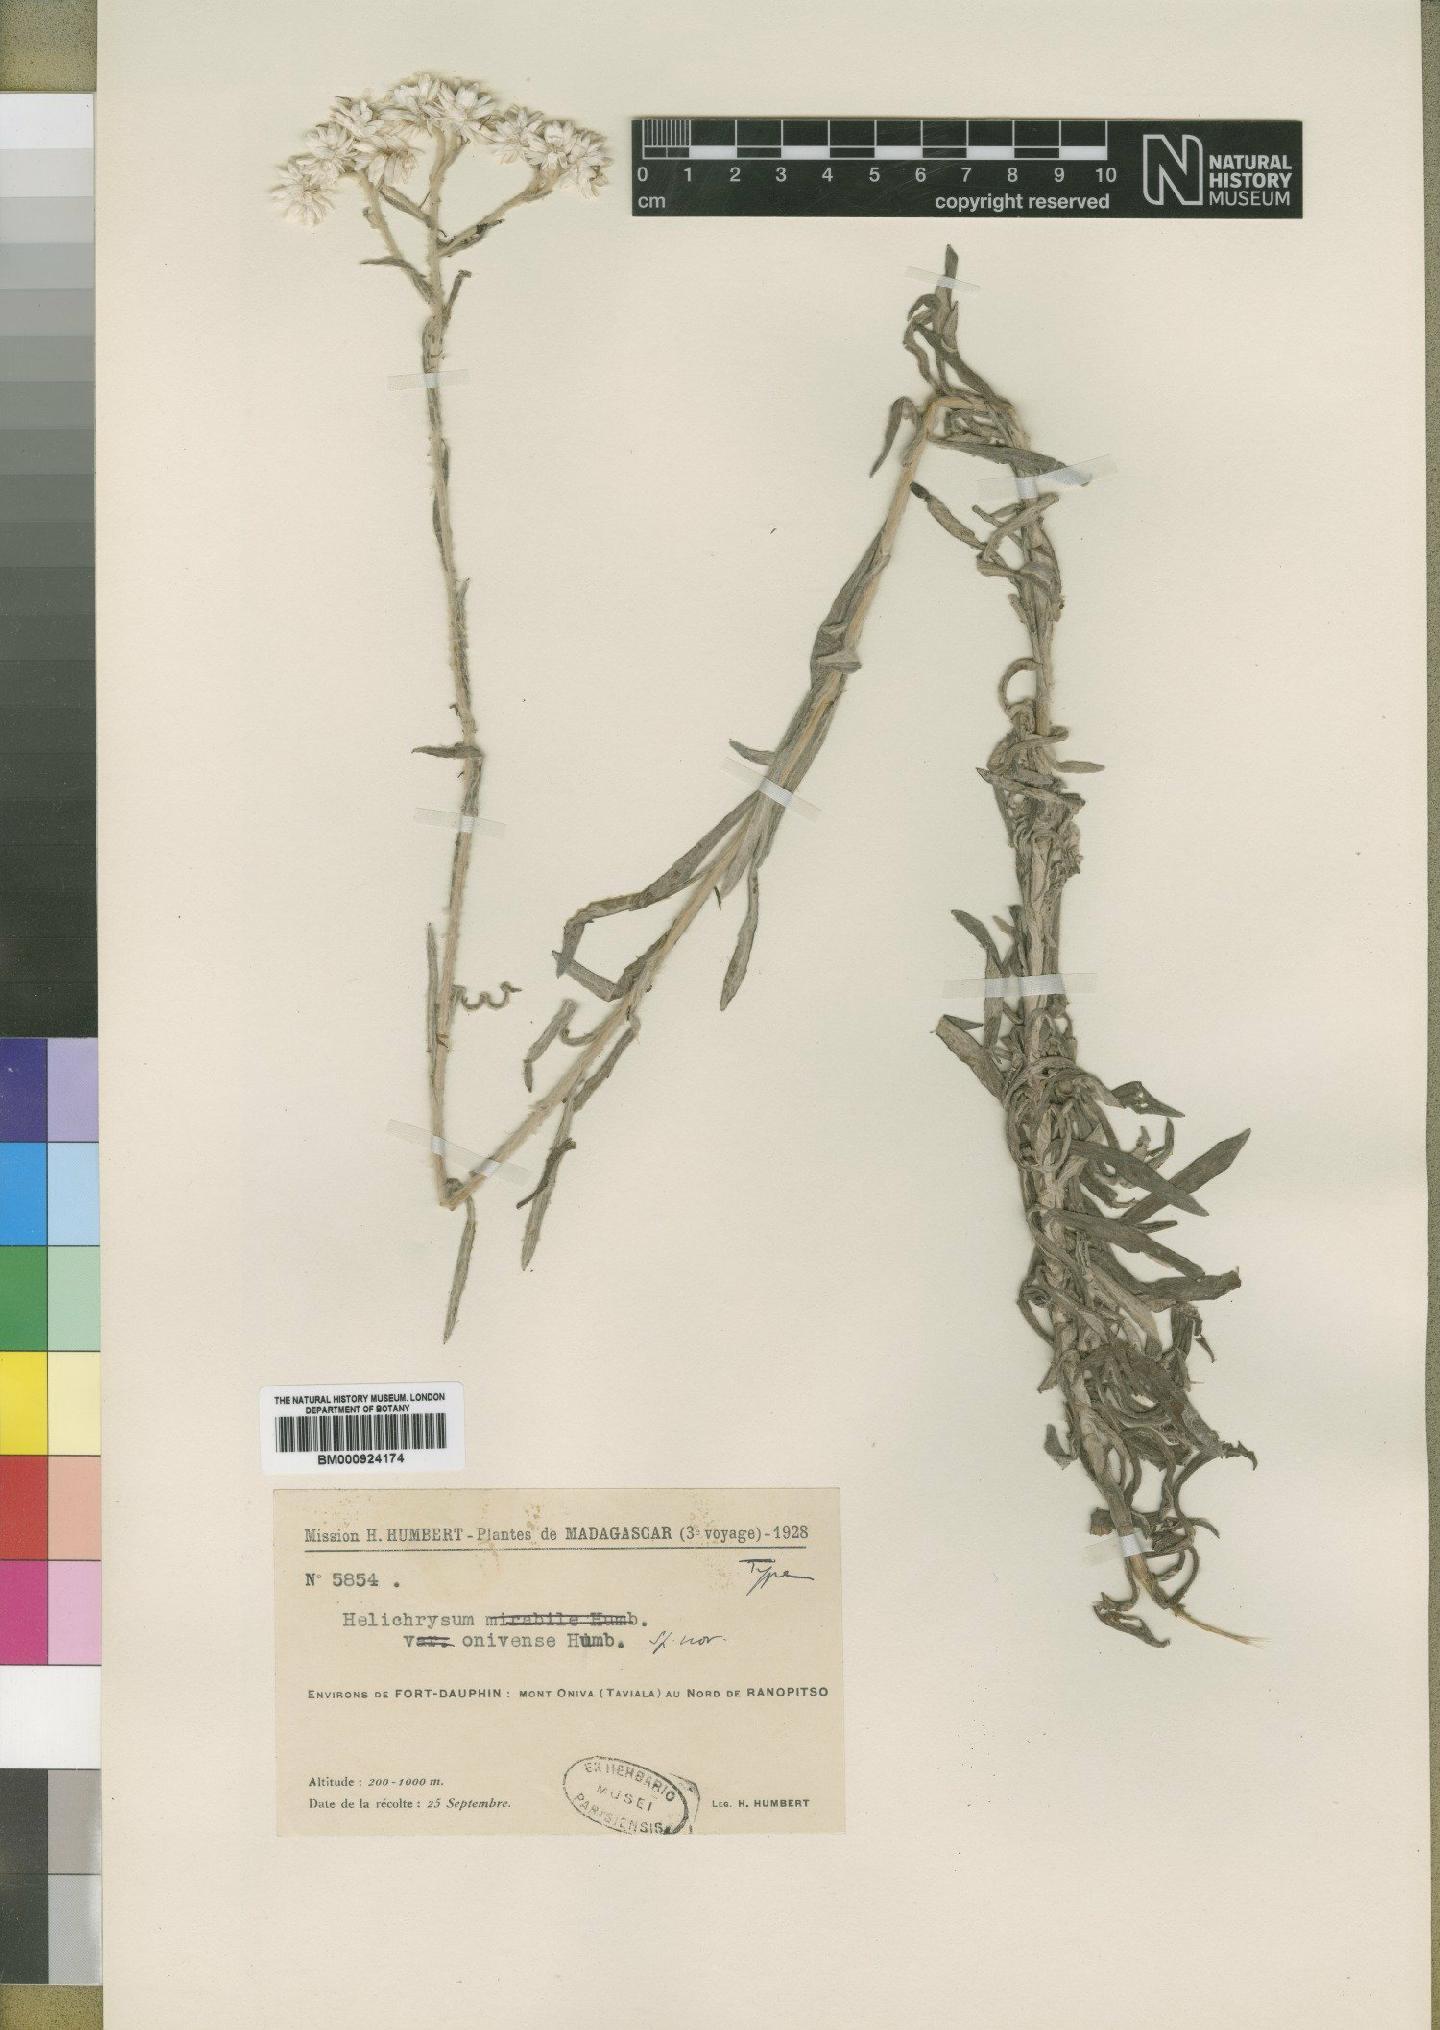 To NHMUK collection (Helichrysum onivense Humbert; Type; NHMUK:ecatalogue:4529202)